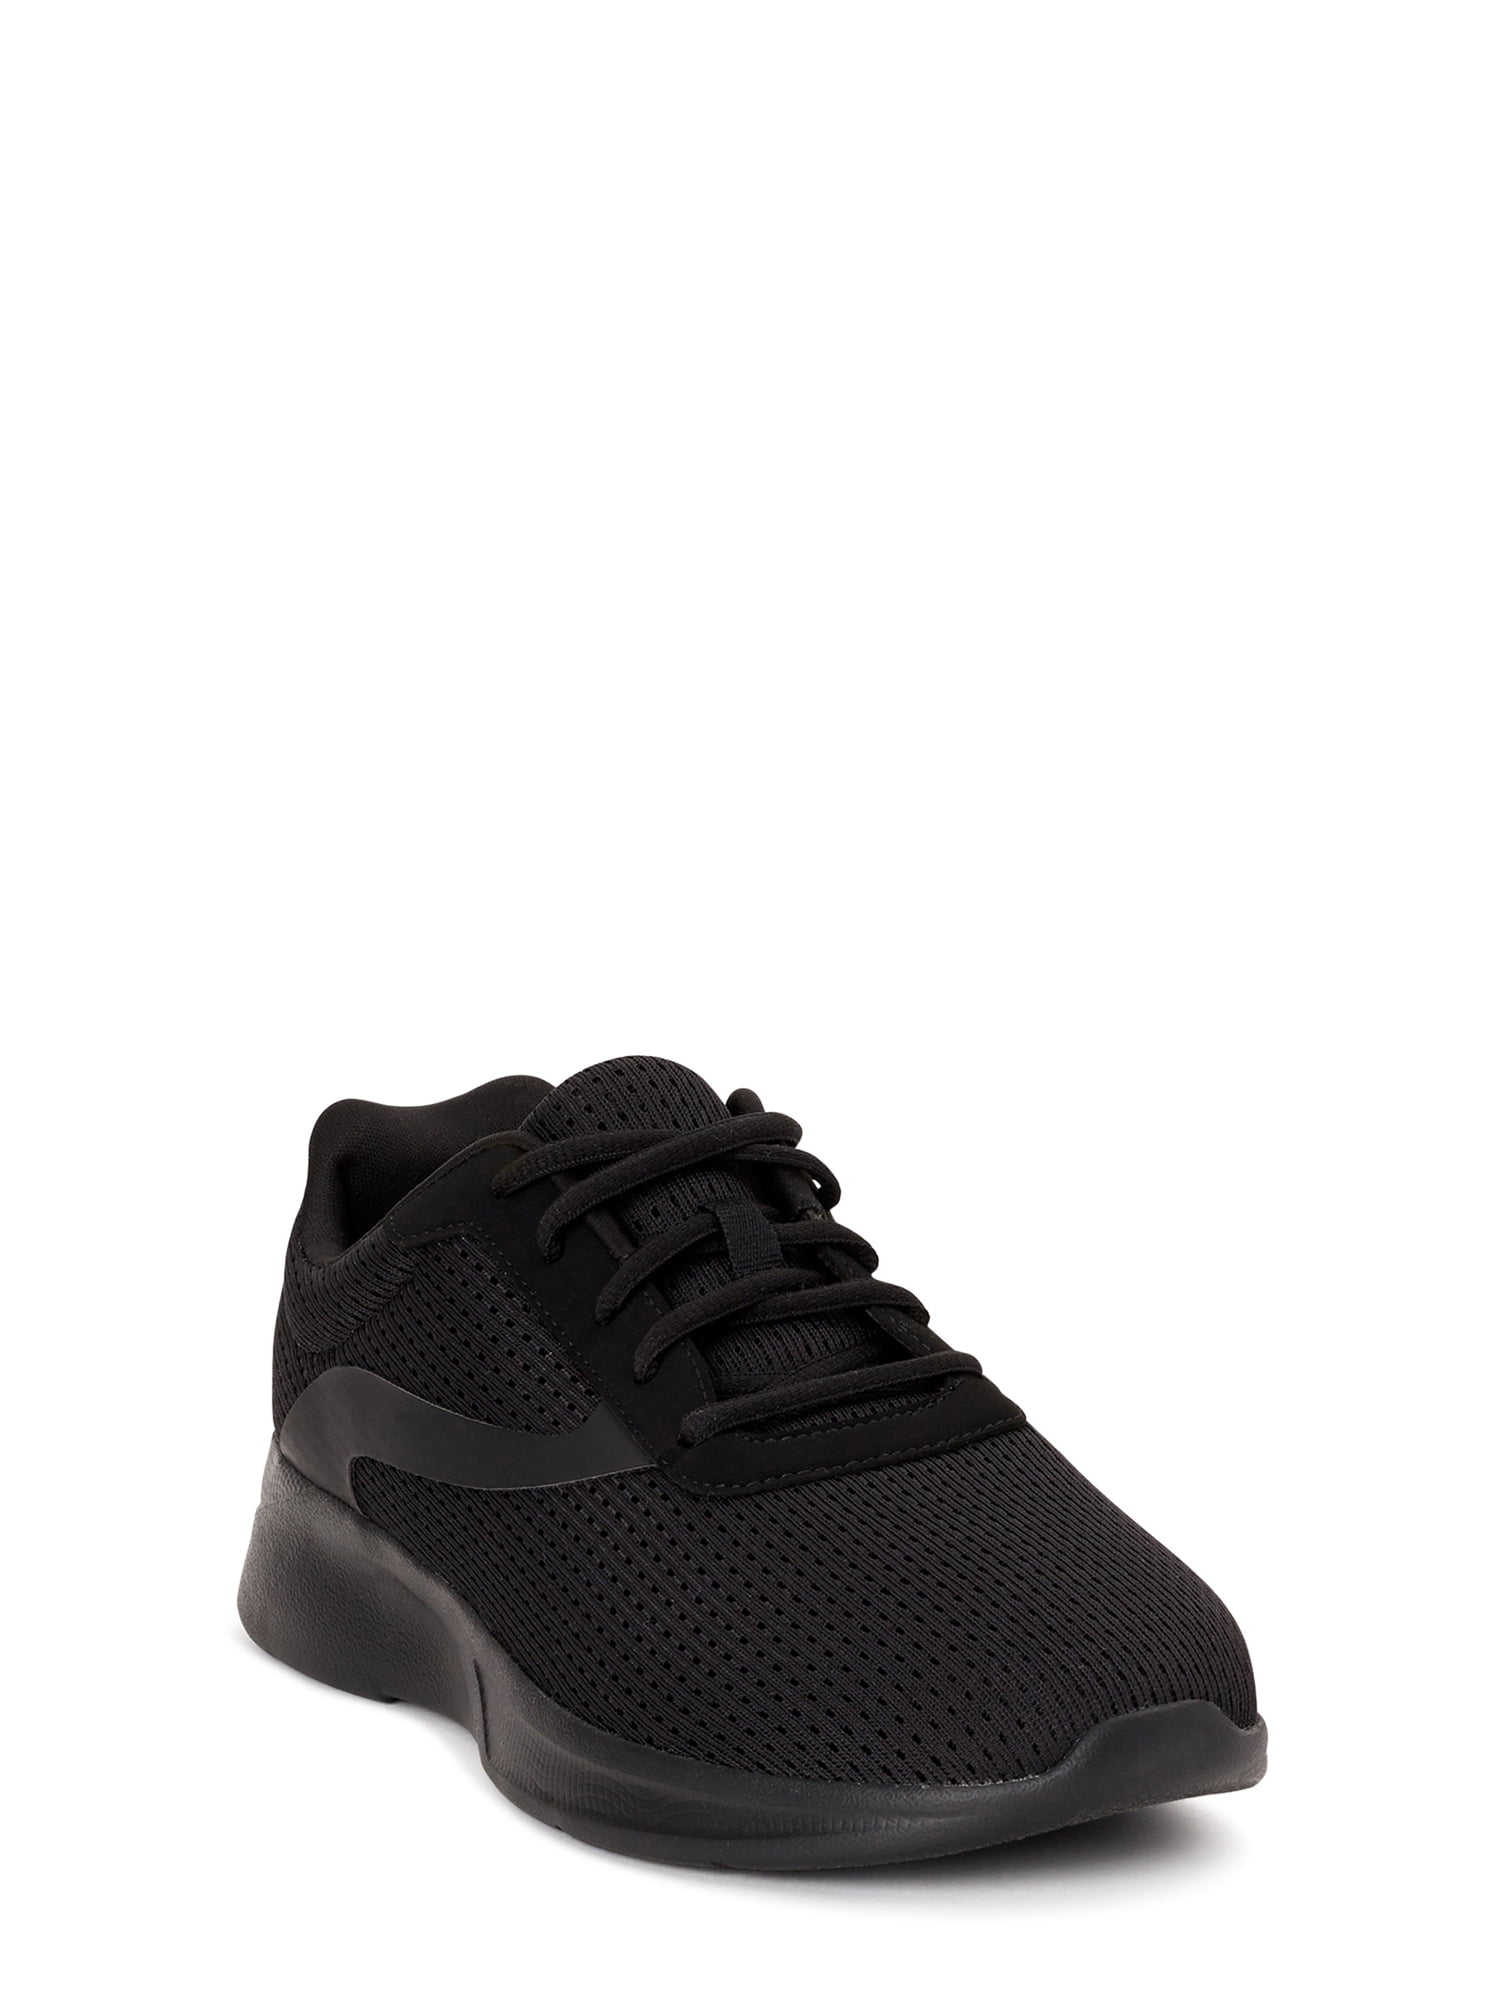 walmart black tennis shoes